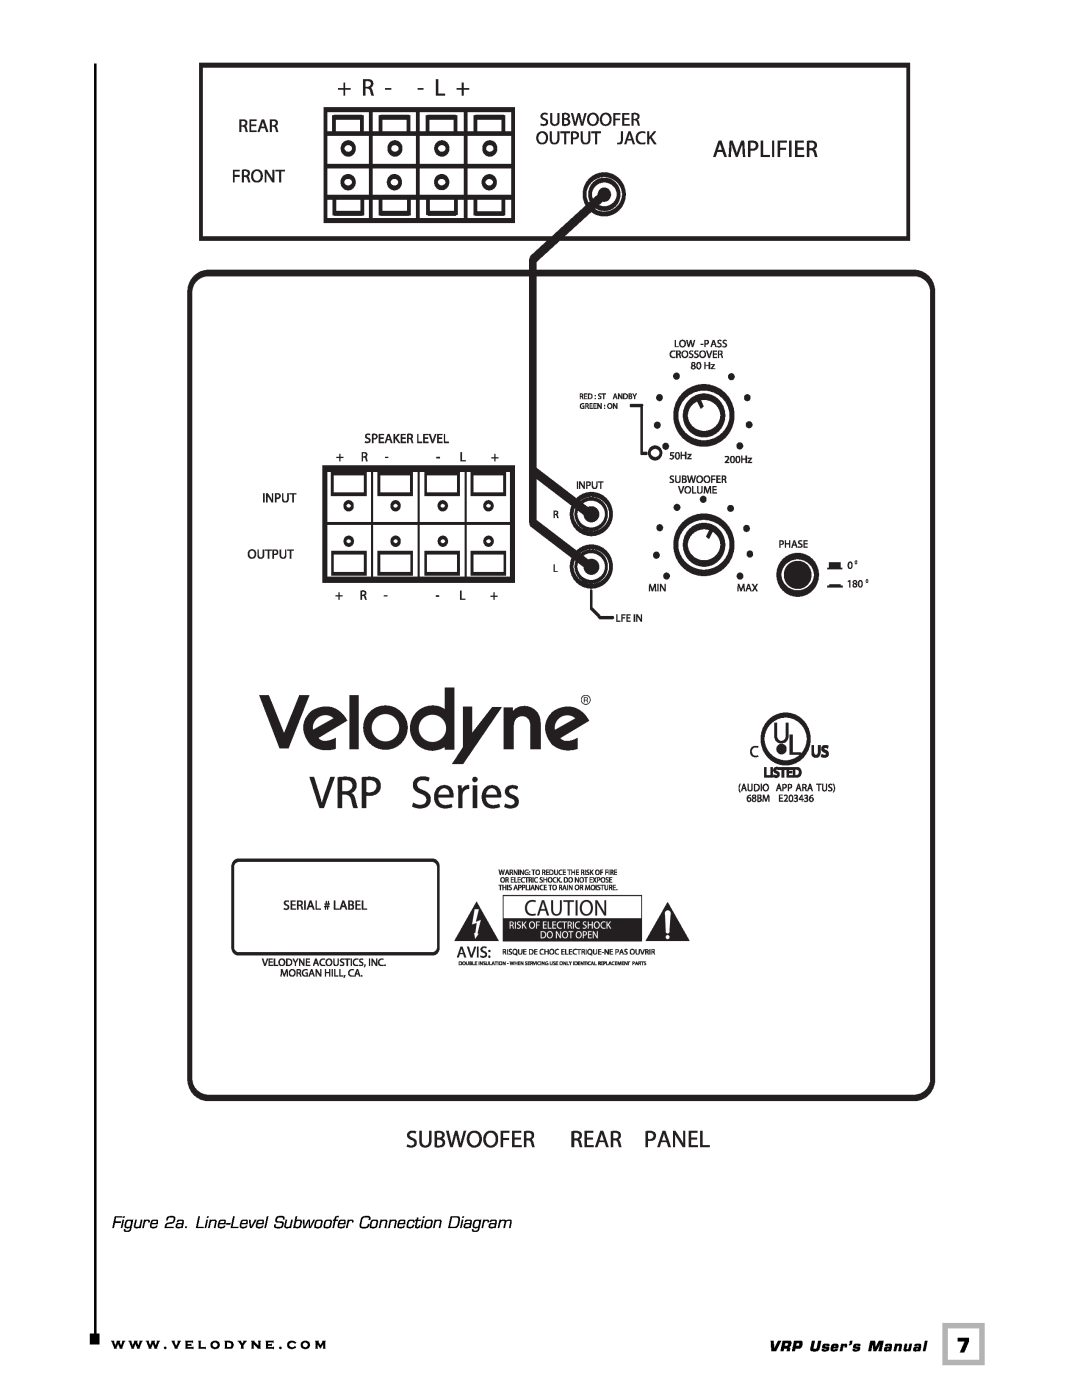 Velodyne Acoustics VRP Series user manual a. Line-LevelSubwoofer Connection Diagram, w w w . v e l o d y n e . c o m 